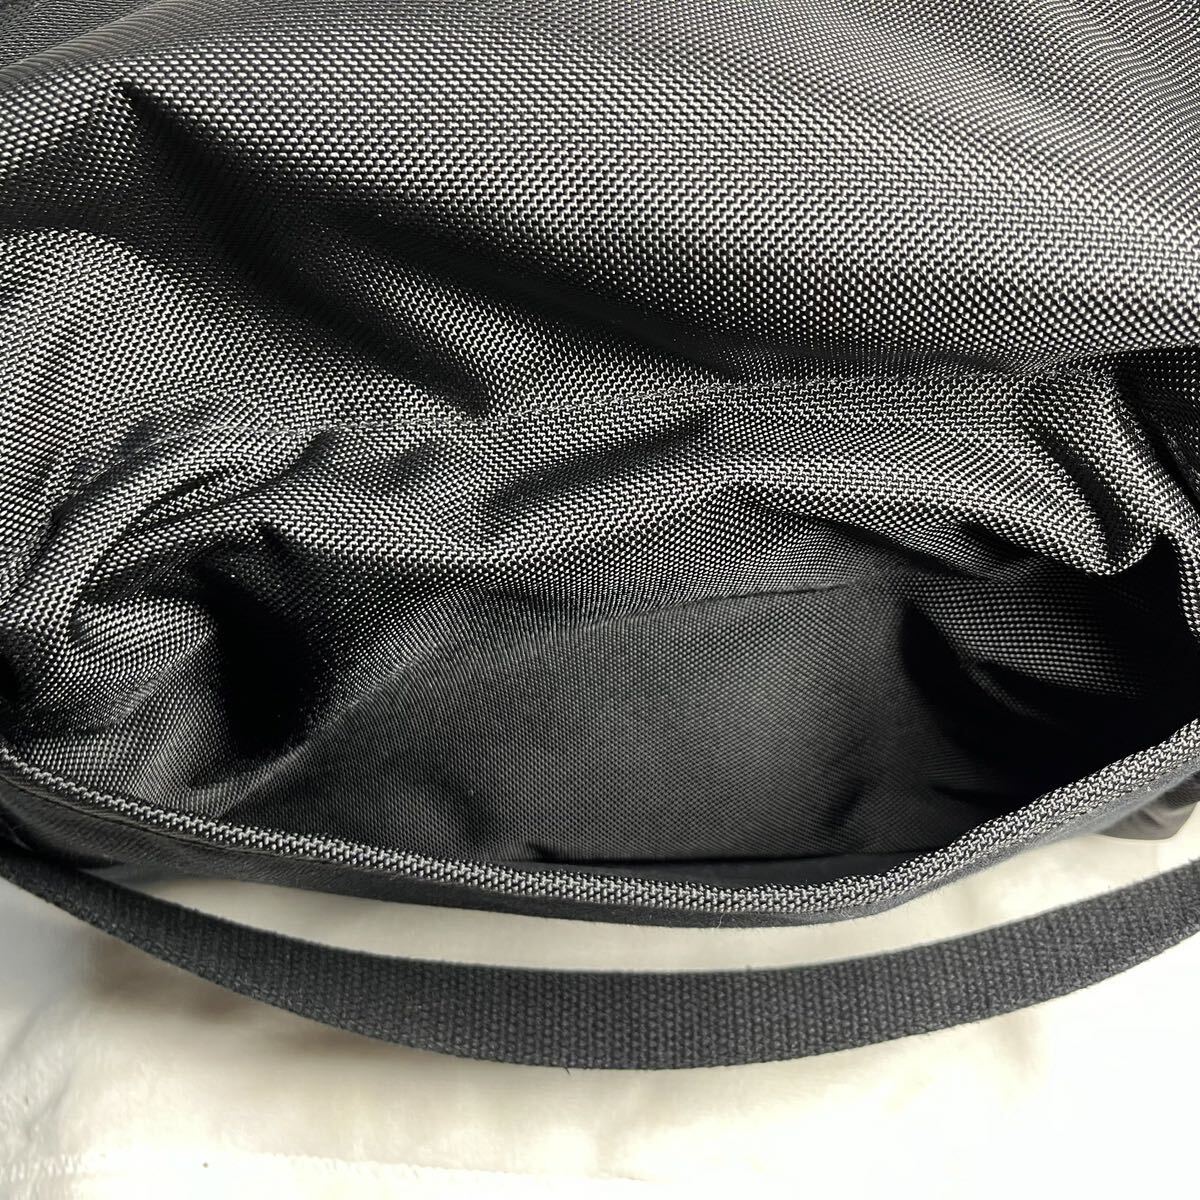 DOMKE( Don ke) F-2BB сумка на плечо шероховатость палочка черный 700-F2B камера сумка 